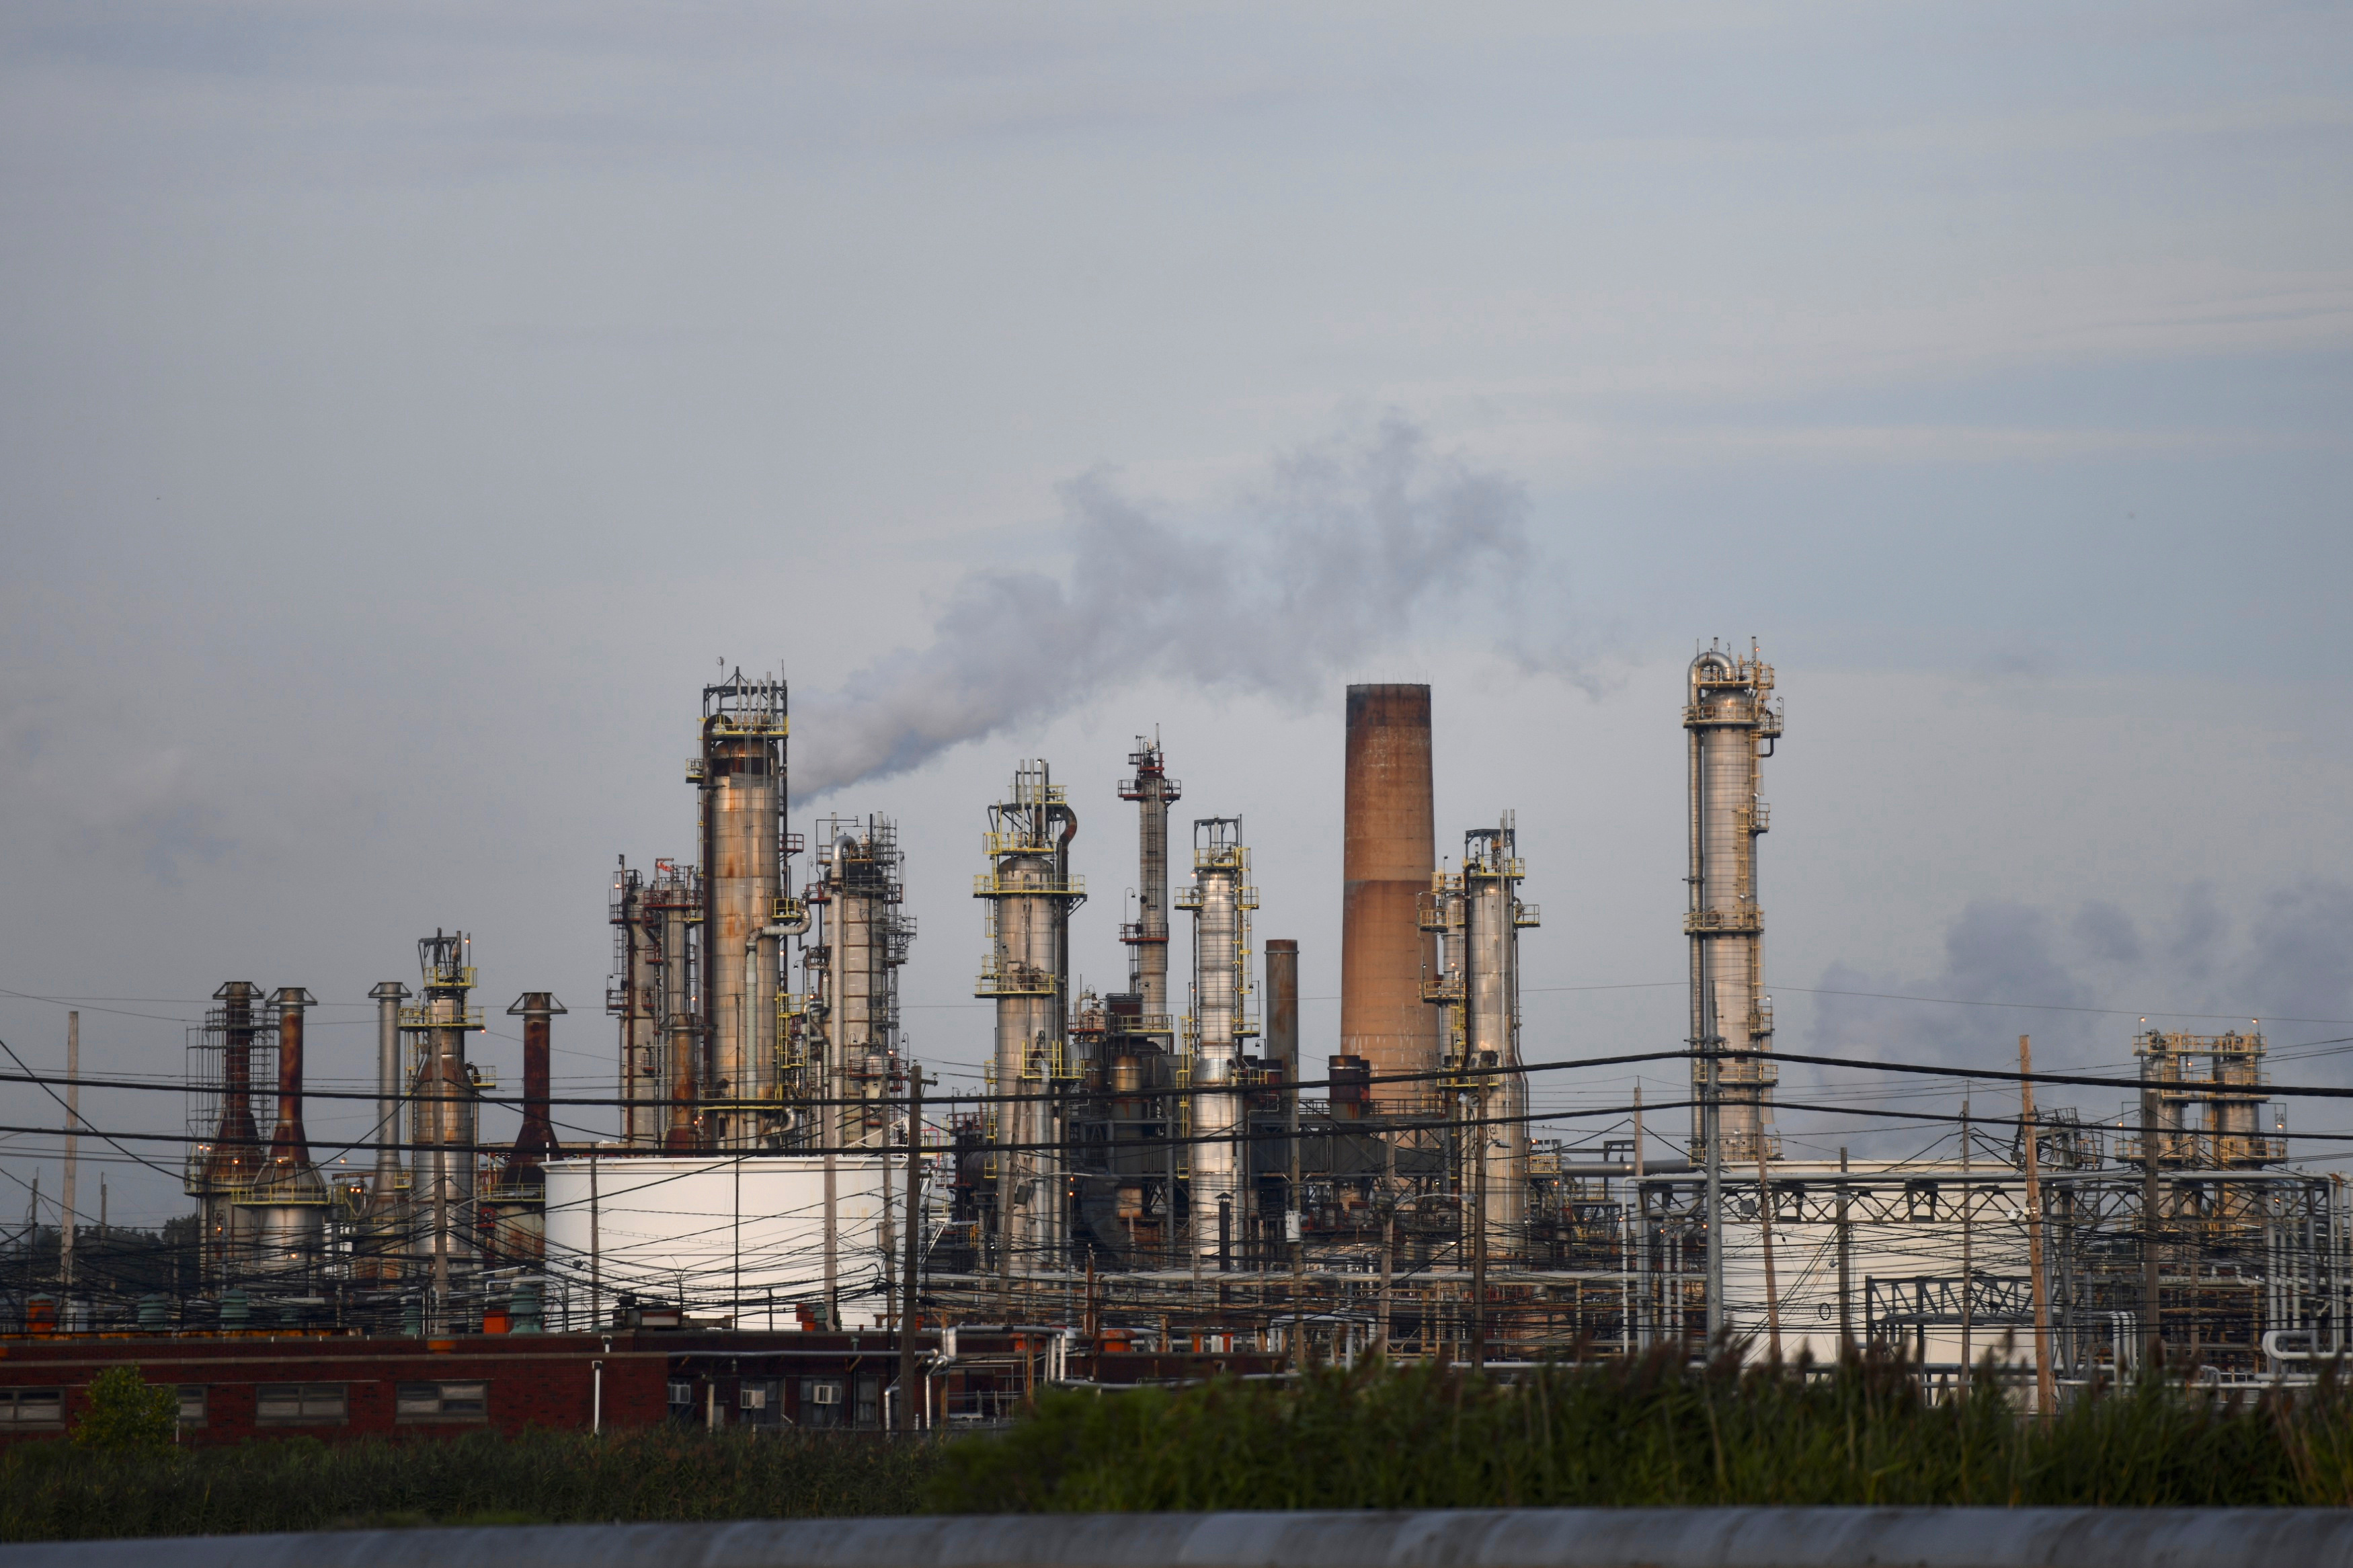 Smoke rises from oil refinery stacks at Philadelphia Energy Solutions plant in Philadelphia, Pennsylvania, U.S., August 21, 2019. REUTERS/Mark Makela